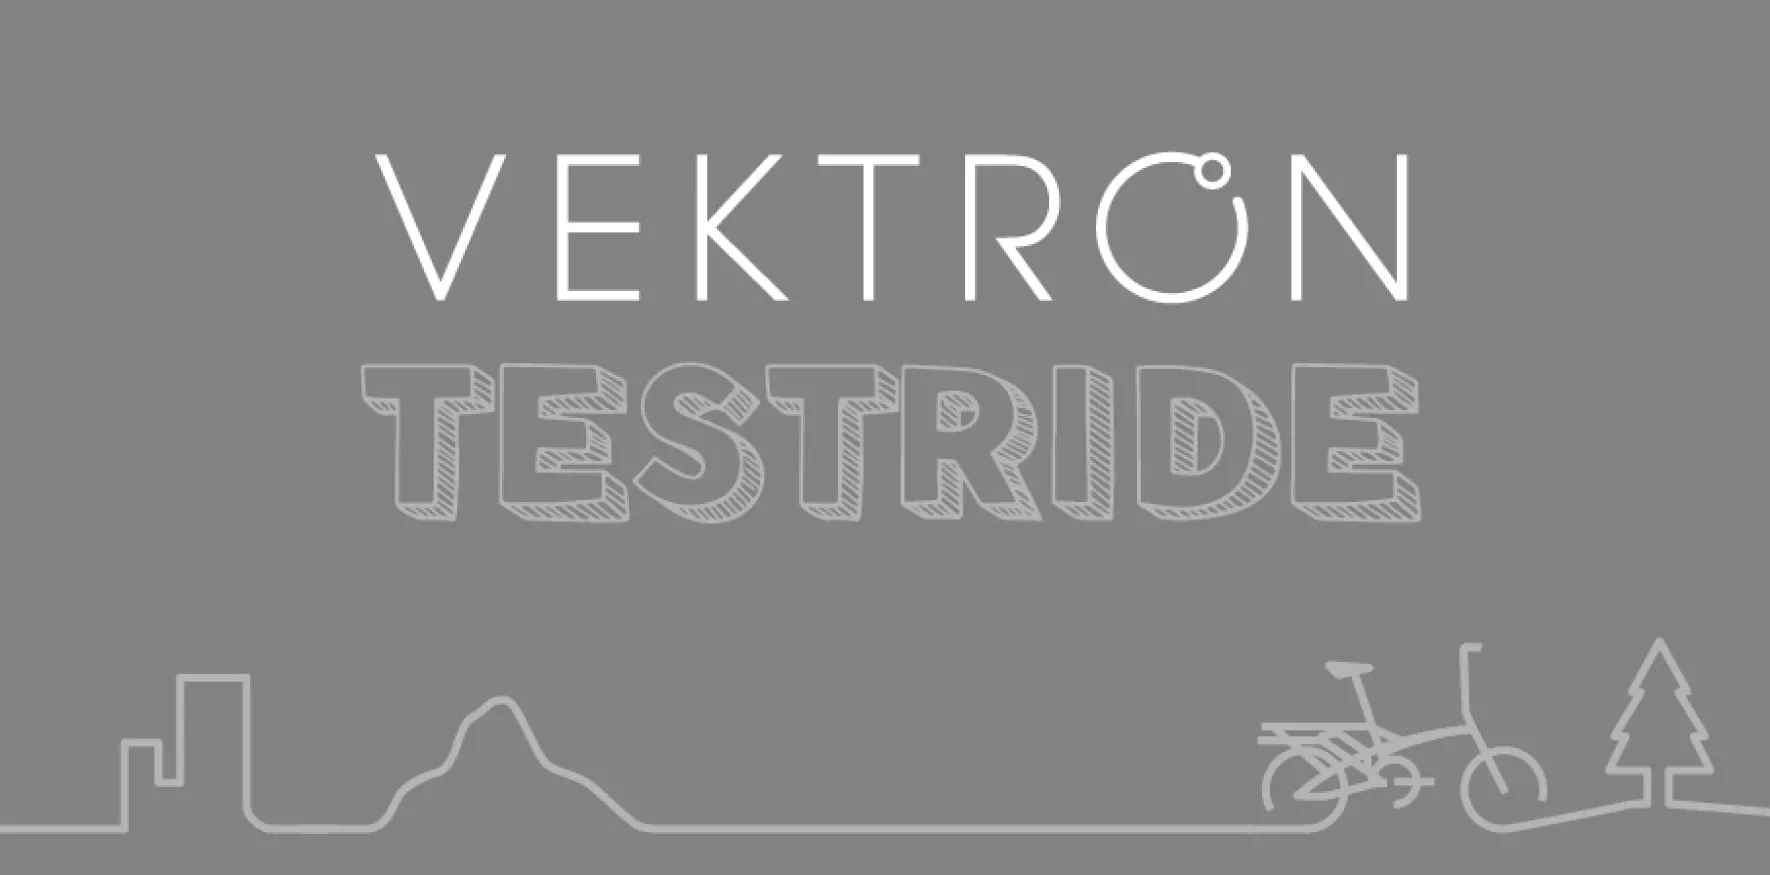 Vektron test ride campaign image